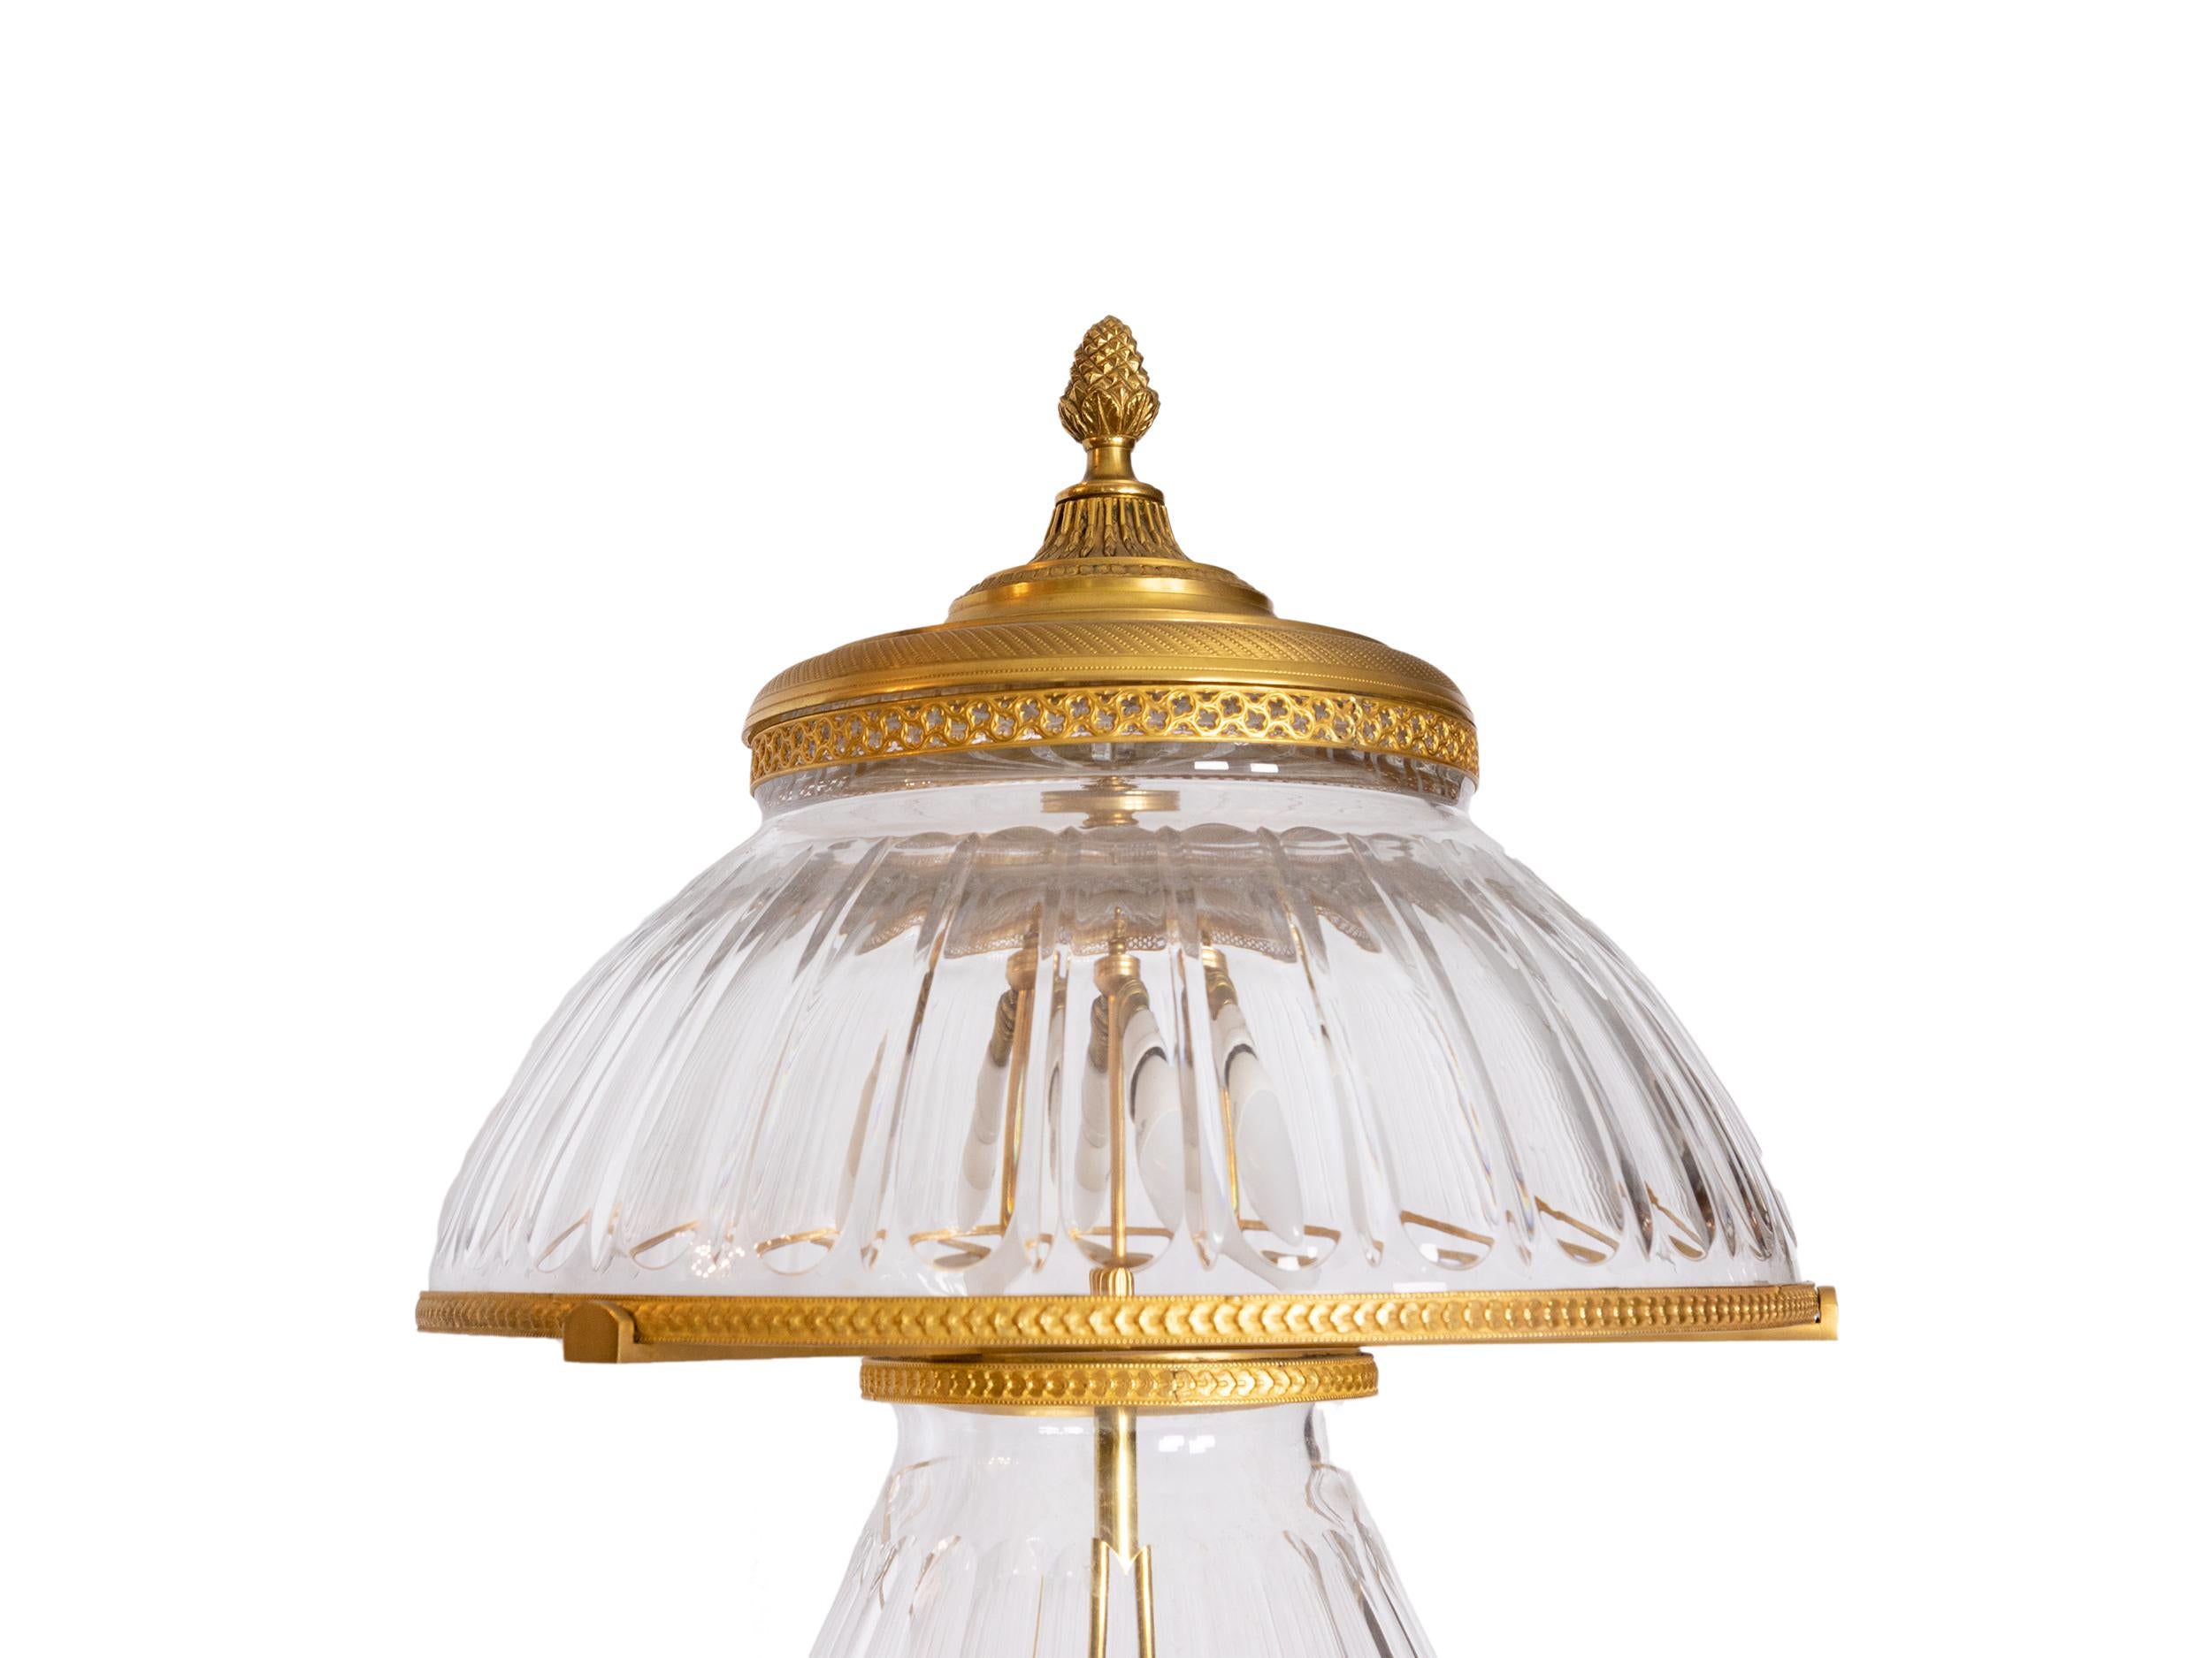 Neoklassizistische Kristall-Tischlampe, Louis XV.-inspiriert, 20. Jahrhundert (Neoklassisches Revival) im Angebot